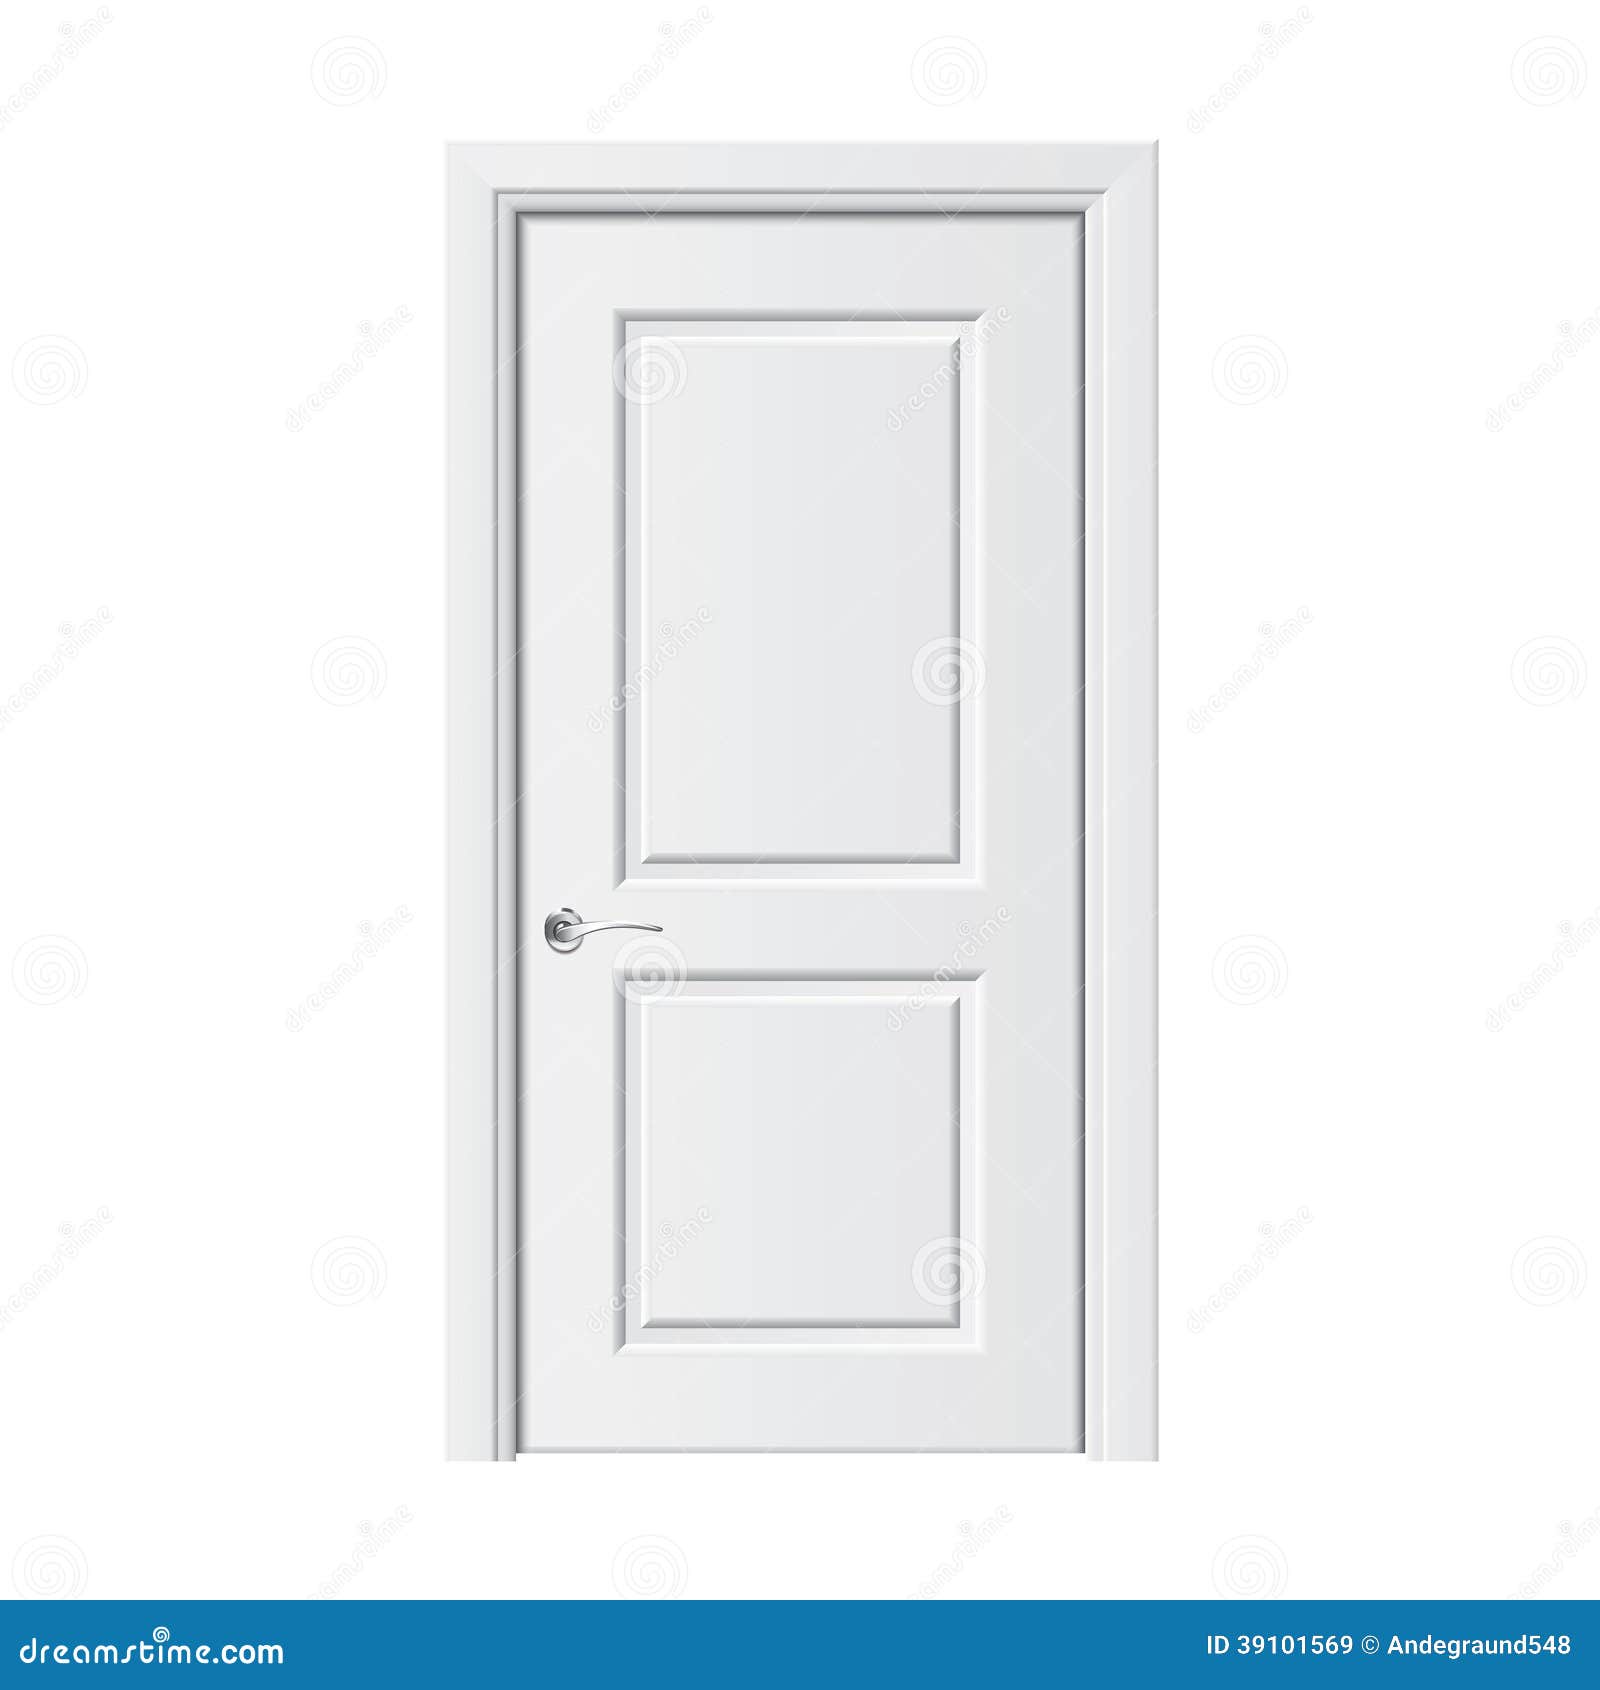 white door illustration isolated photo realistic 39101569